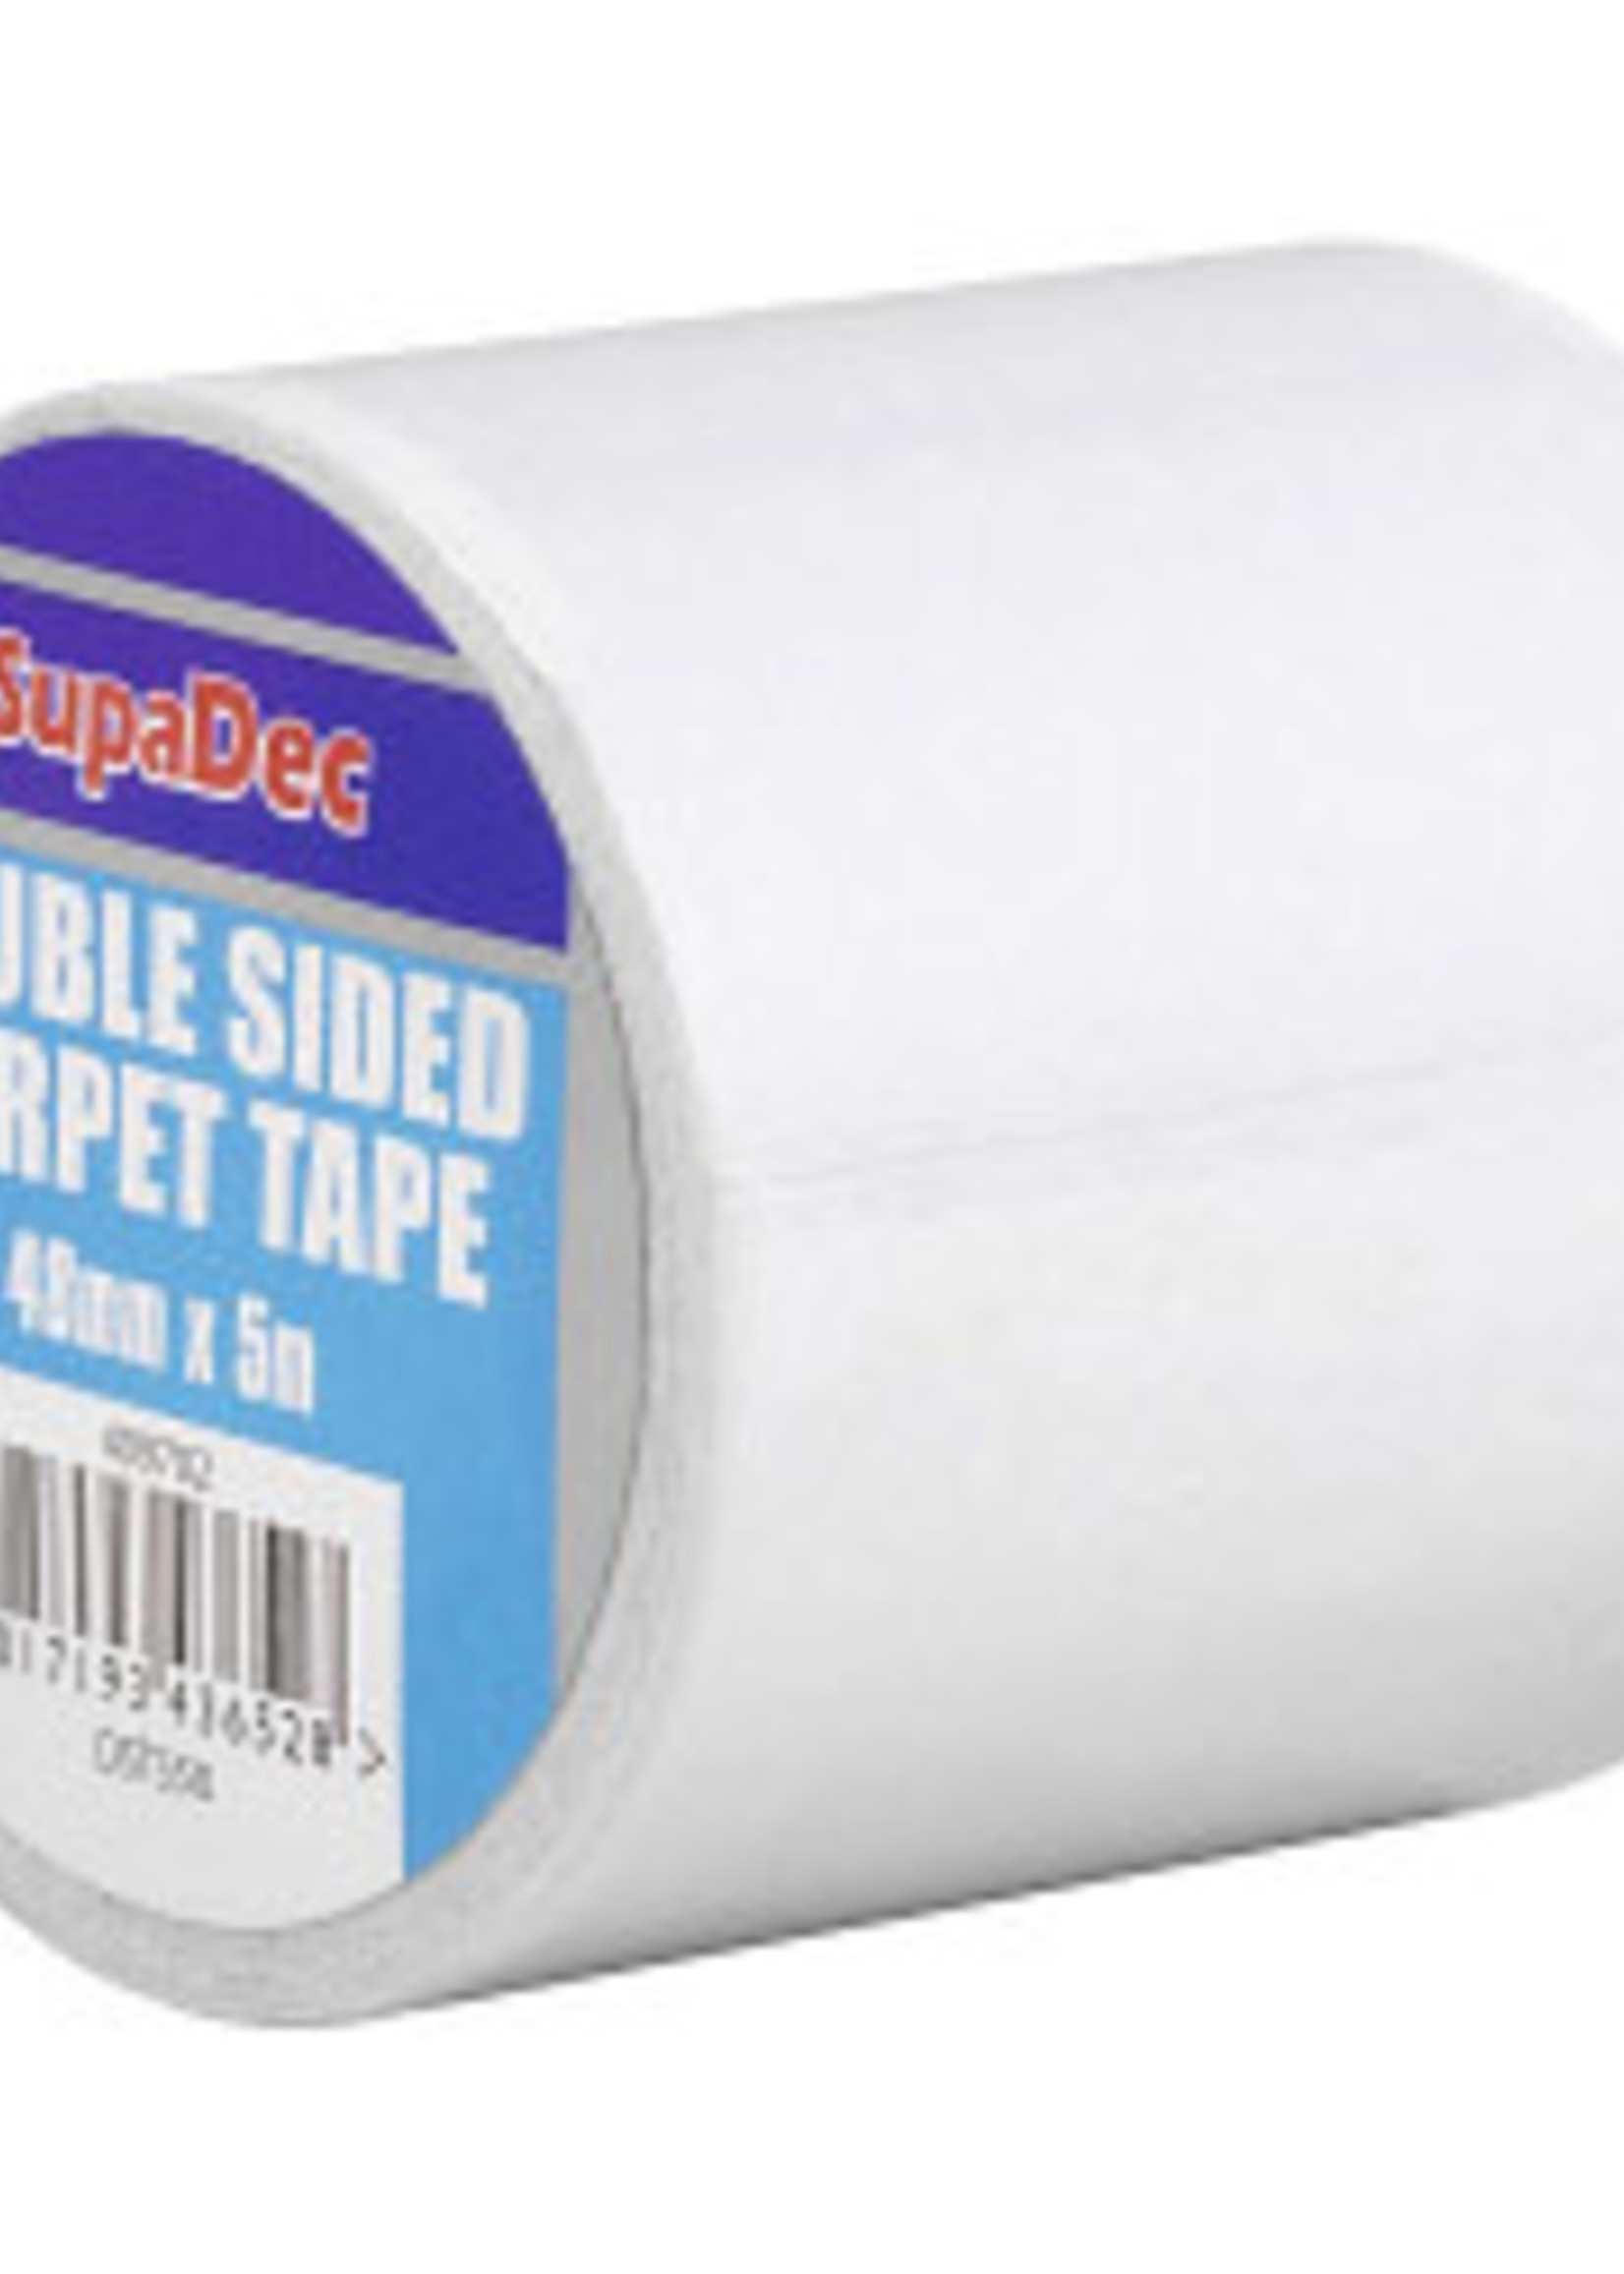 SupaDec SupaDec Double Sided Carpet Tape 48mm x 5m